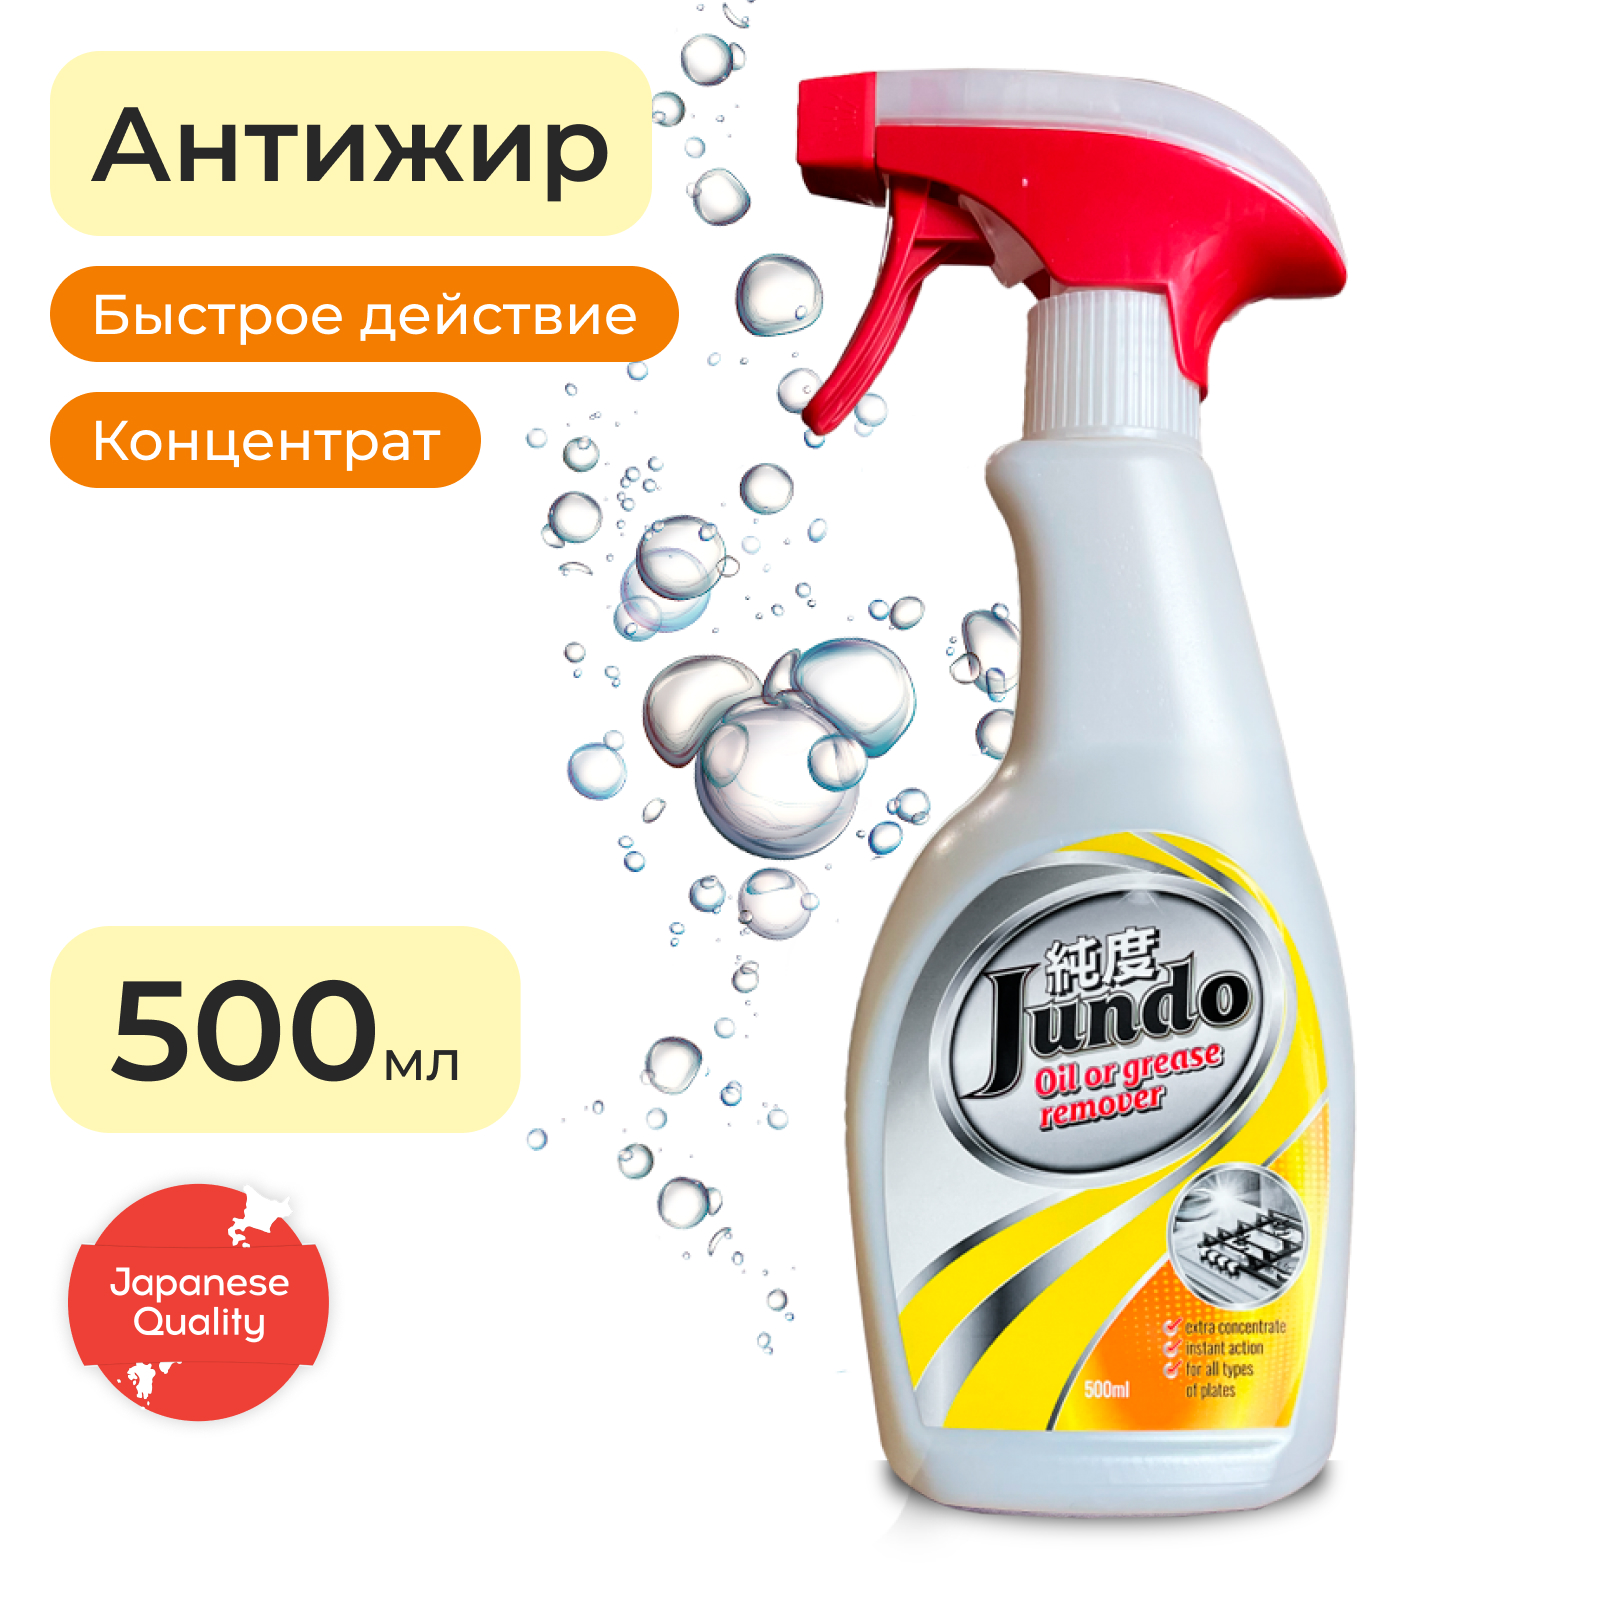 Жироудалитель концентрированный Jundo Oil or grease remover 500 мл